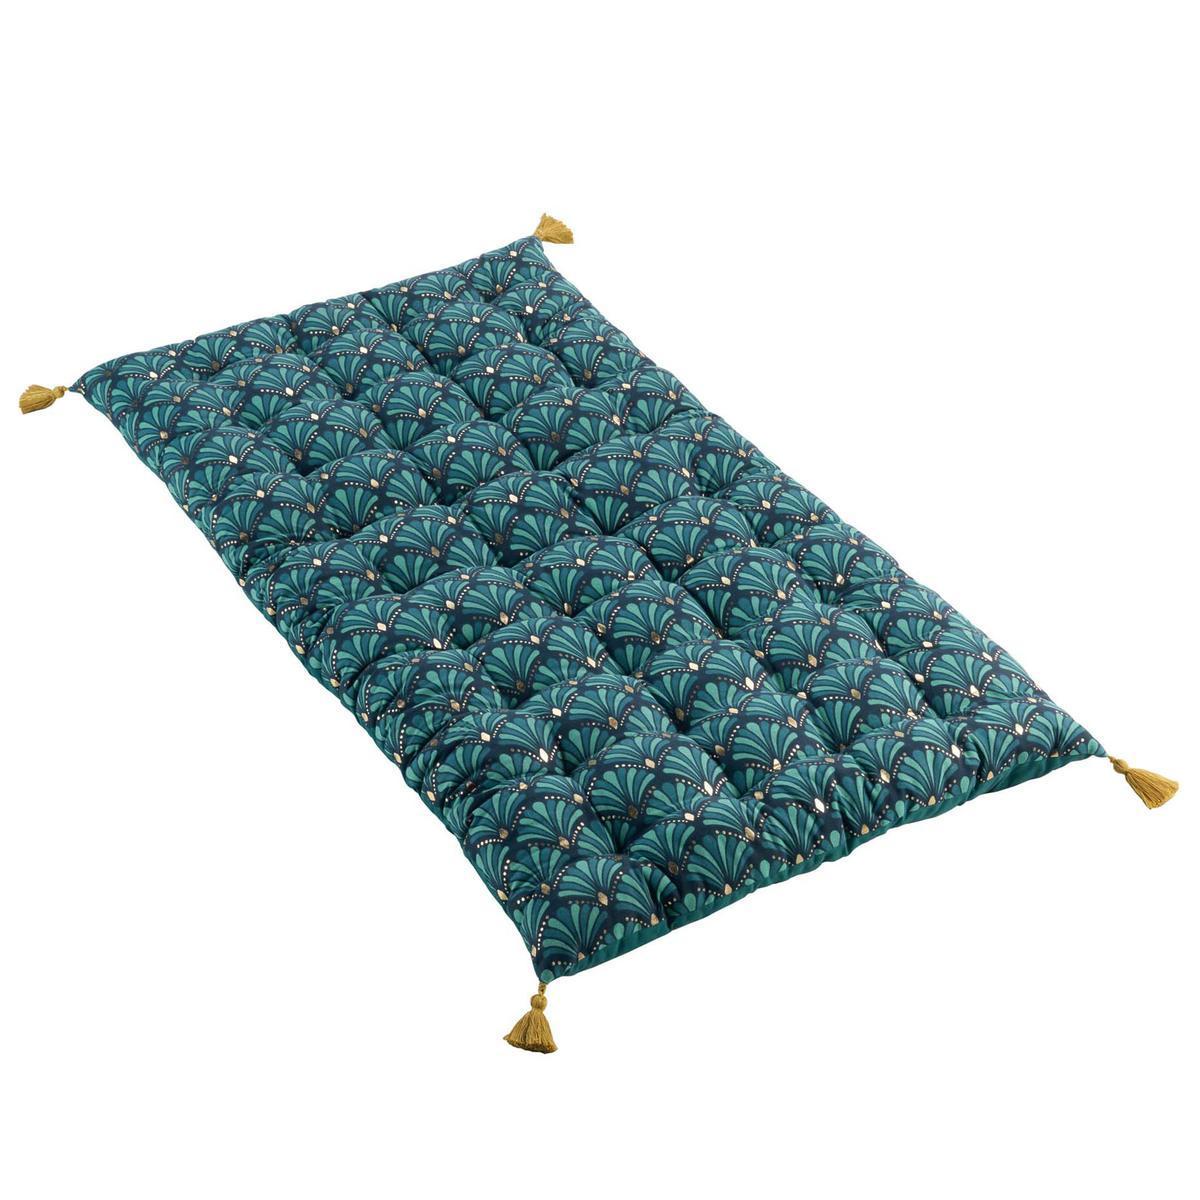 Matelas de sol à pompons Artchic - L 120 x l 60 cm - Vert, bleu